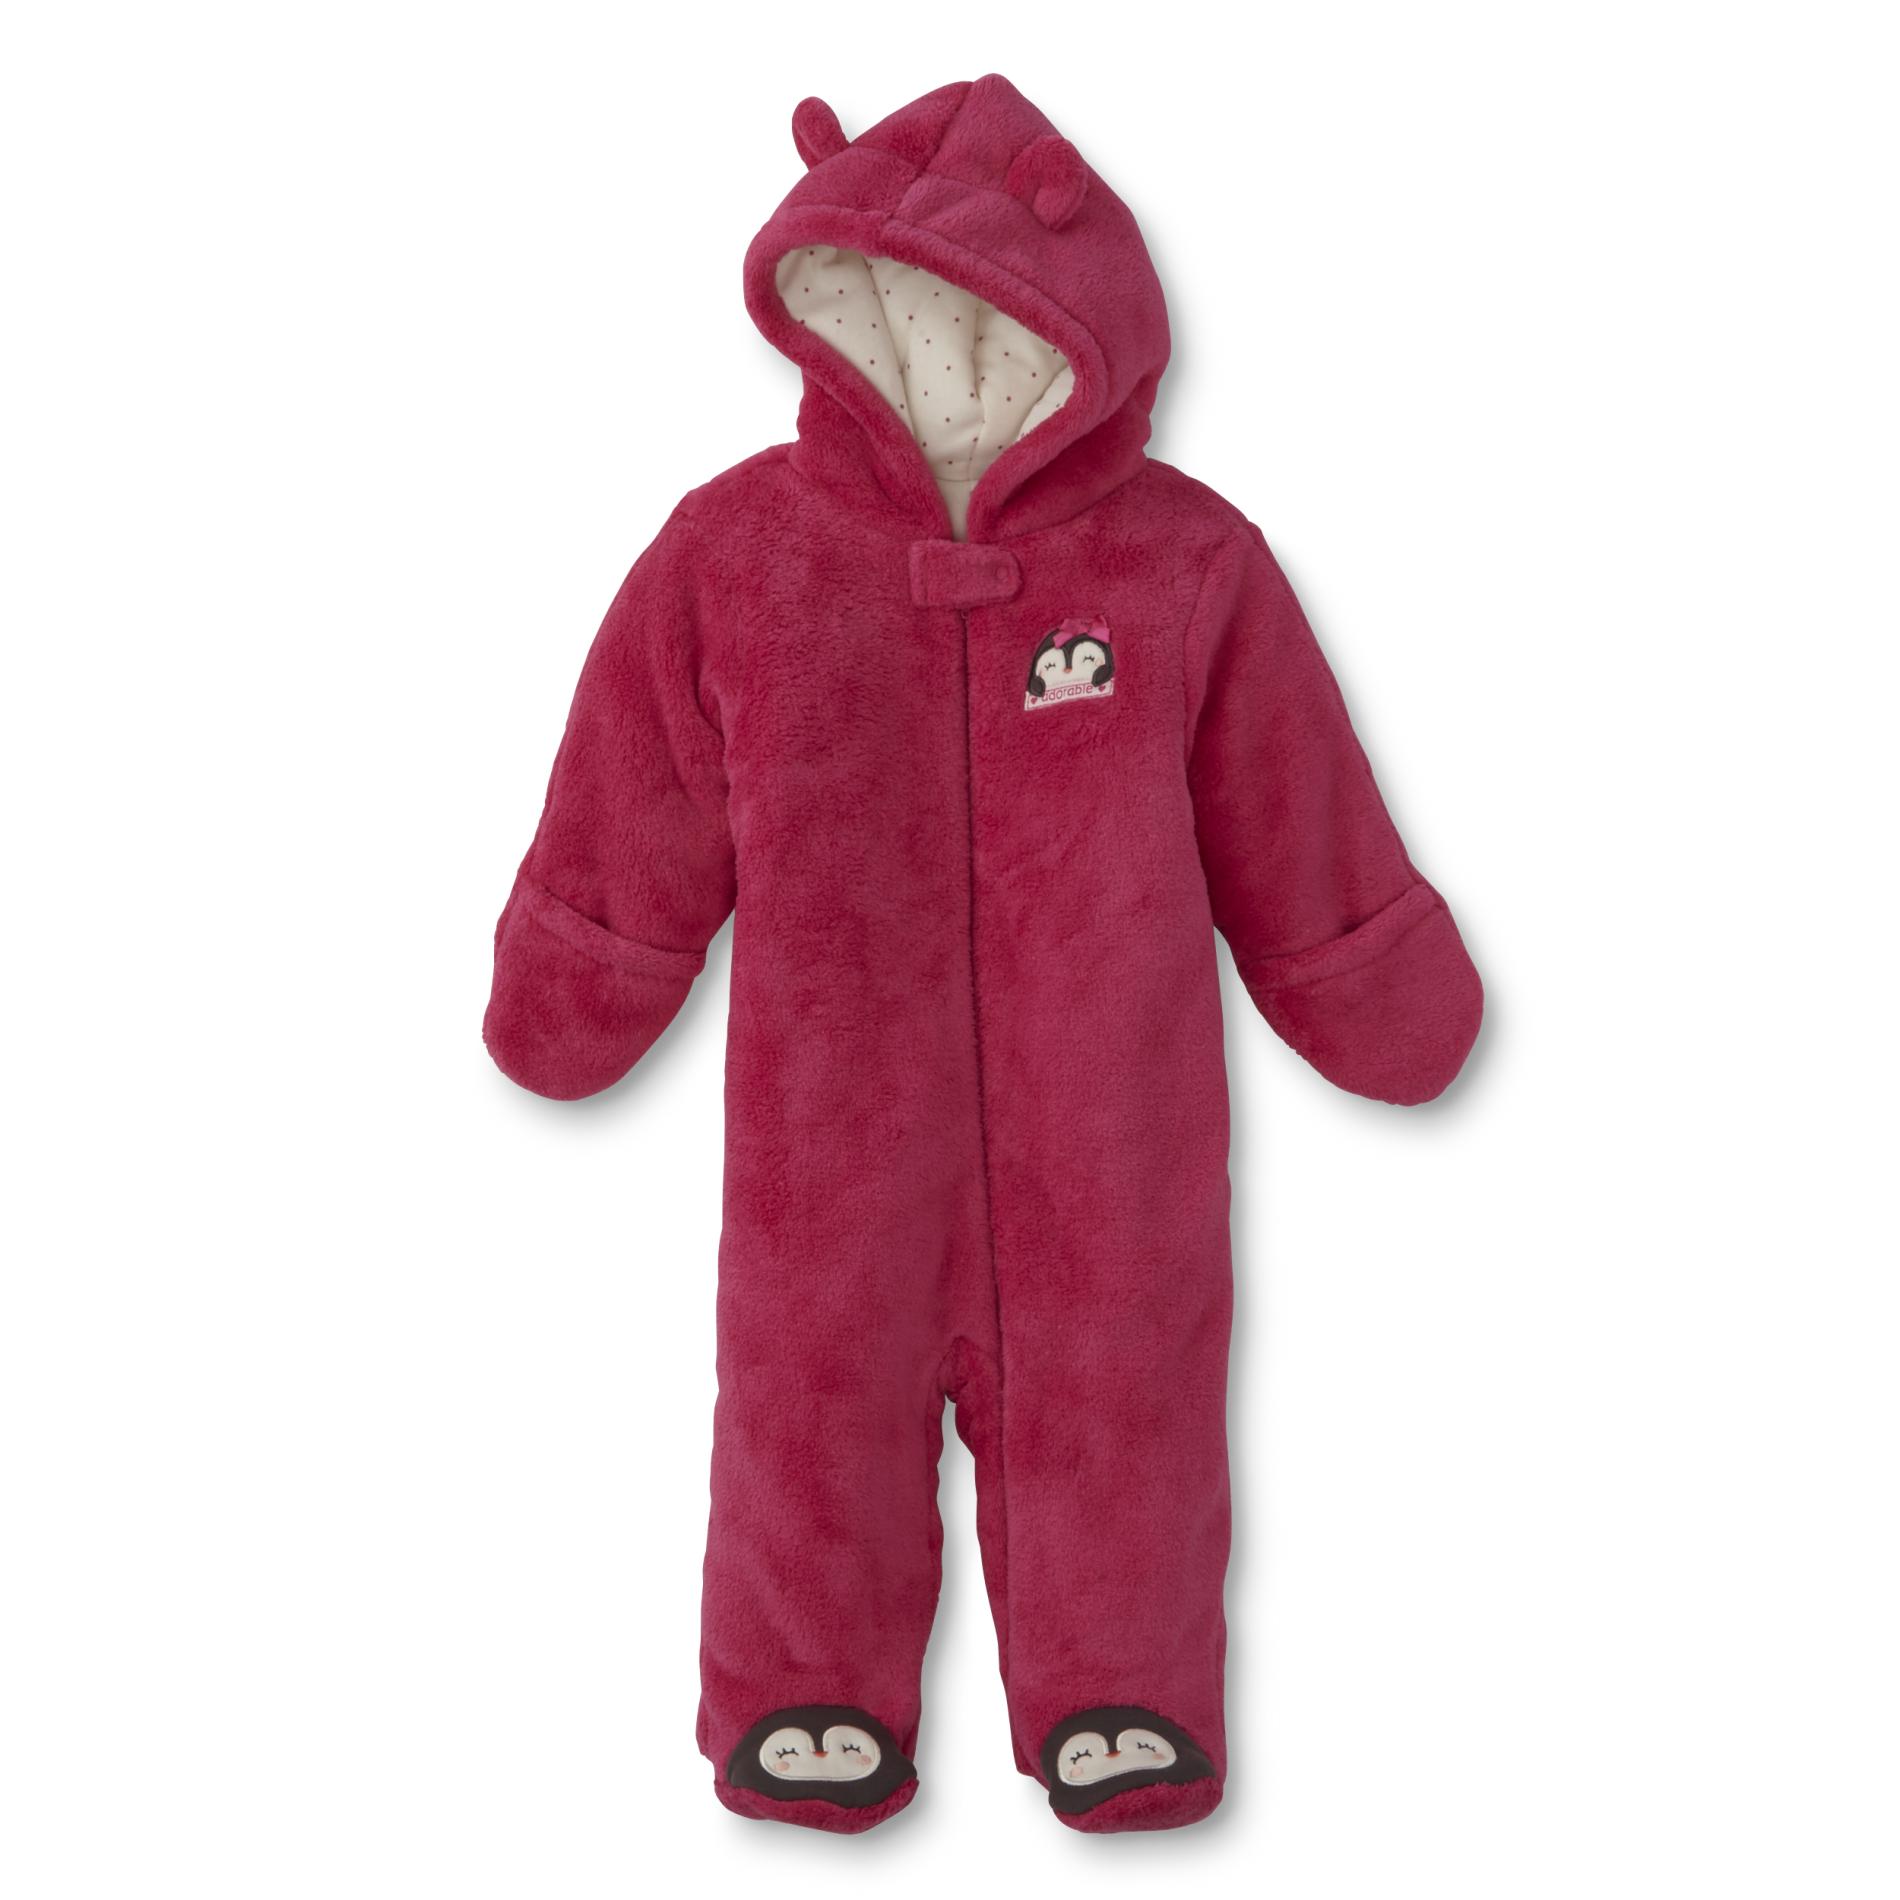 Little Wonders Newborn Girl's Hooded Fleece Pram Suit - Penguin